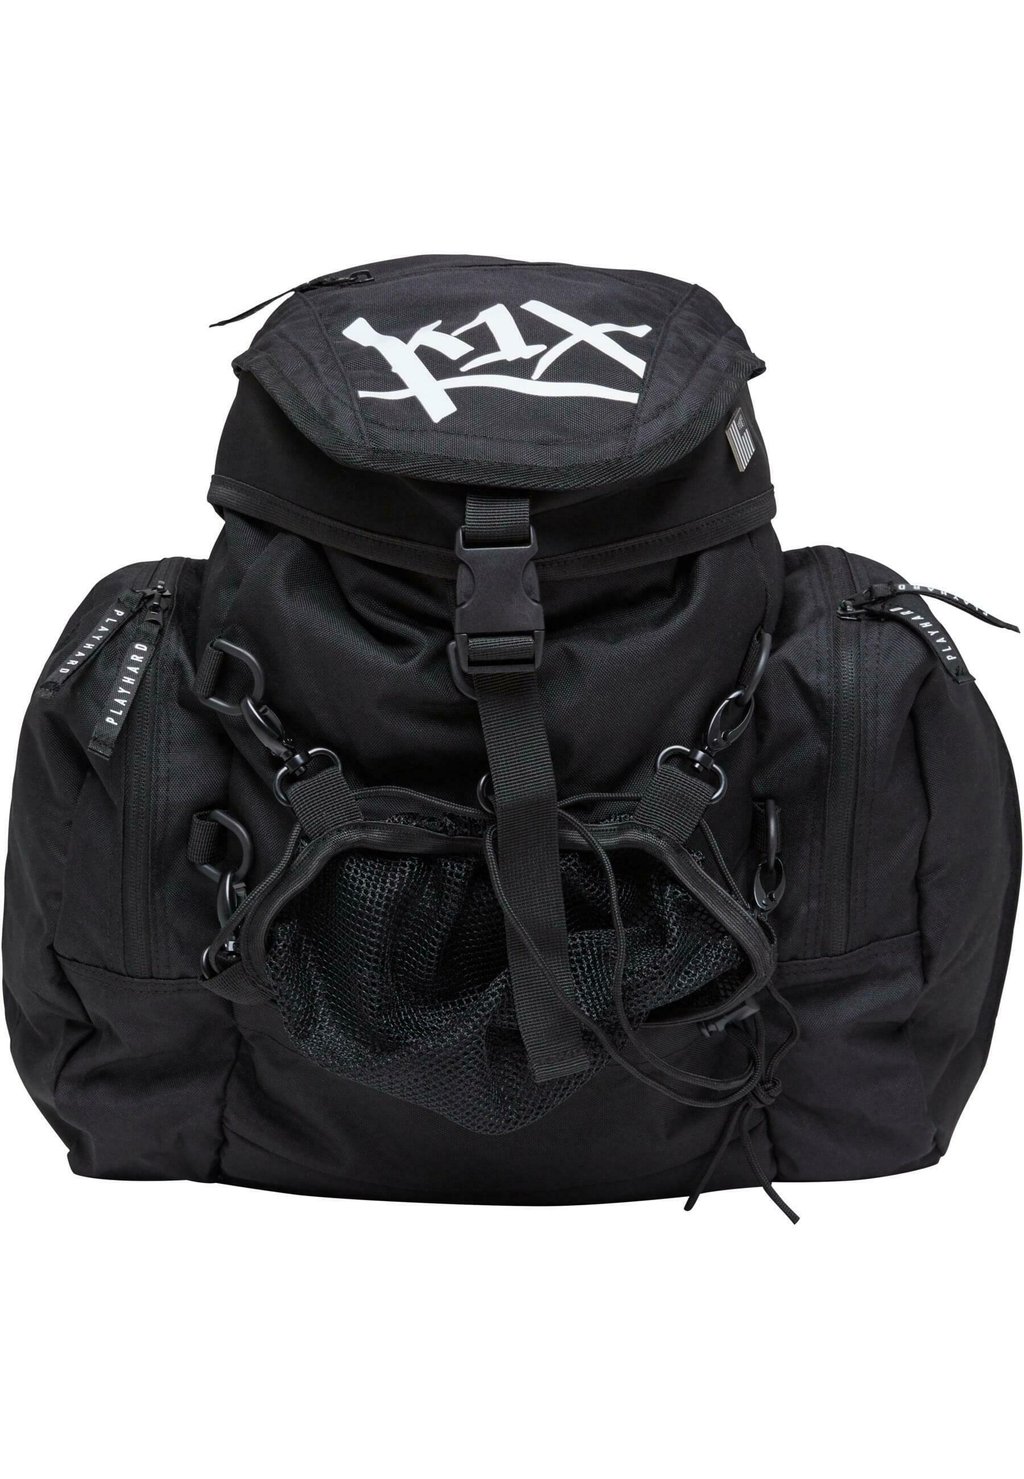 Рюкзак BALLCAMP UNISEX K1X, черный цена и фото